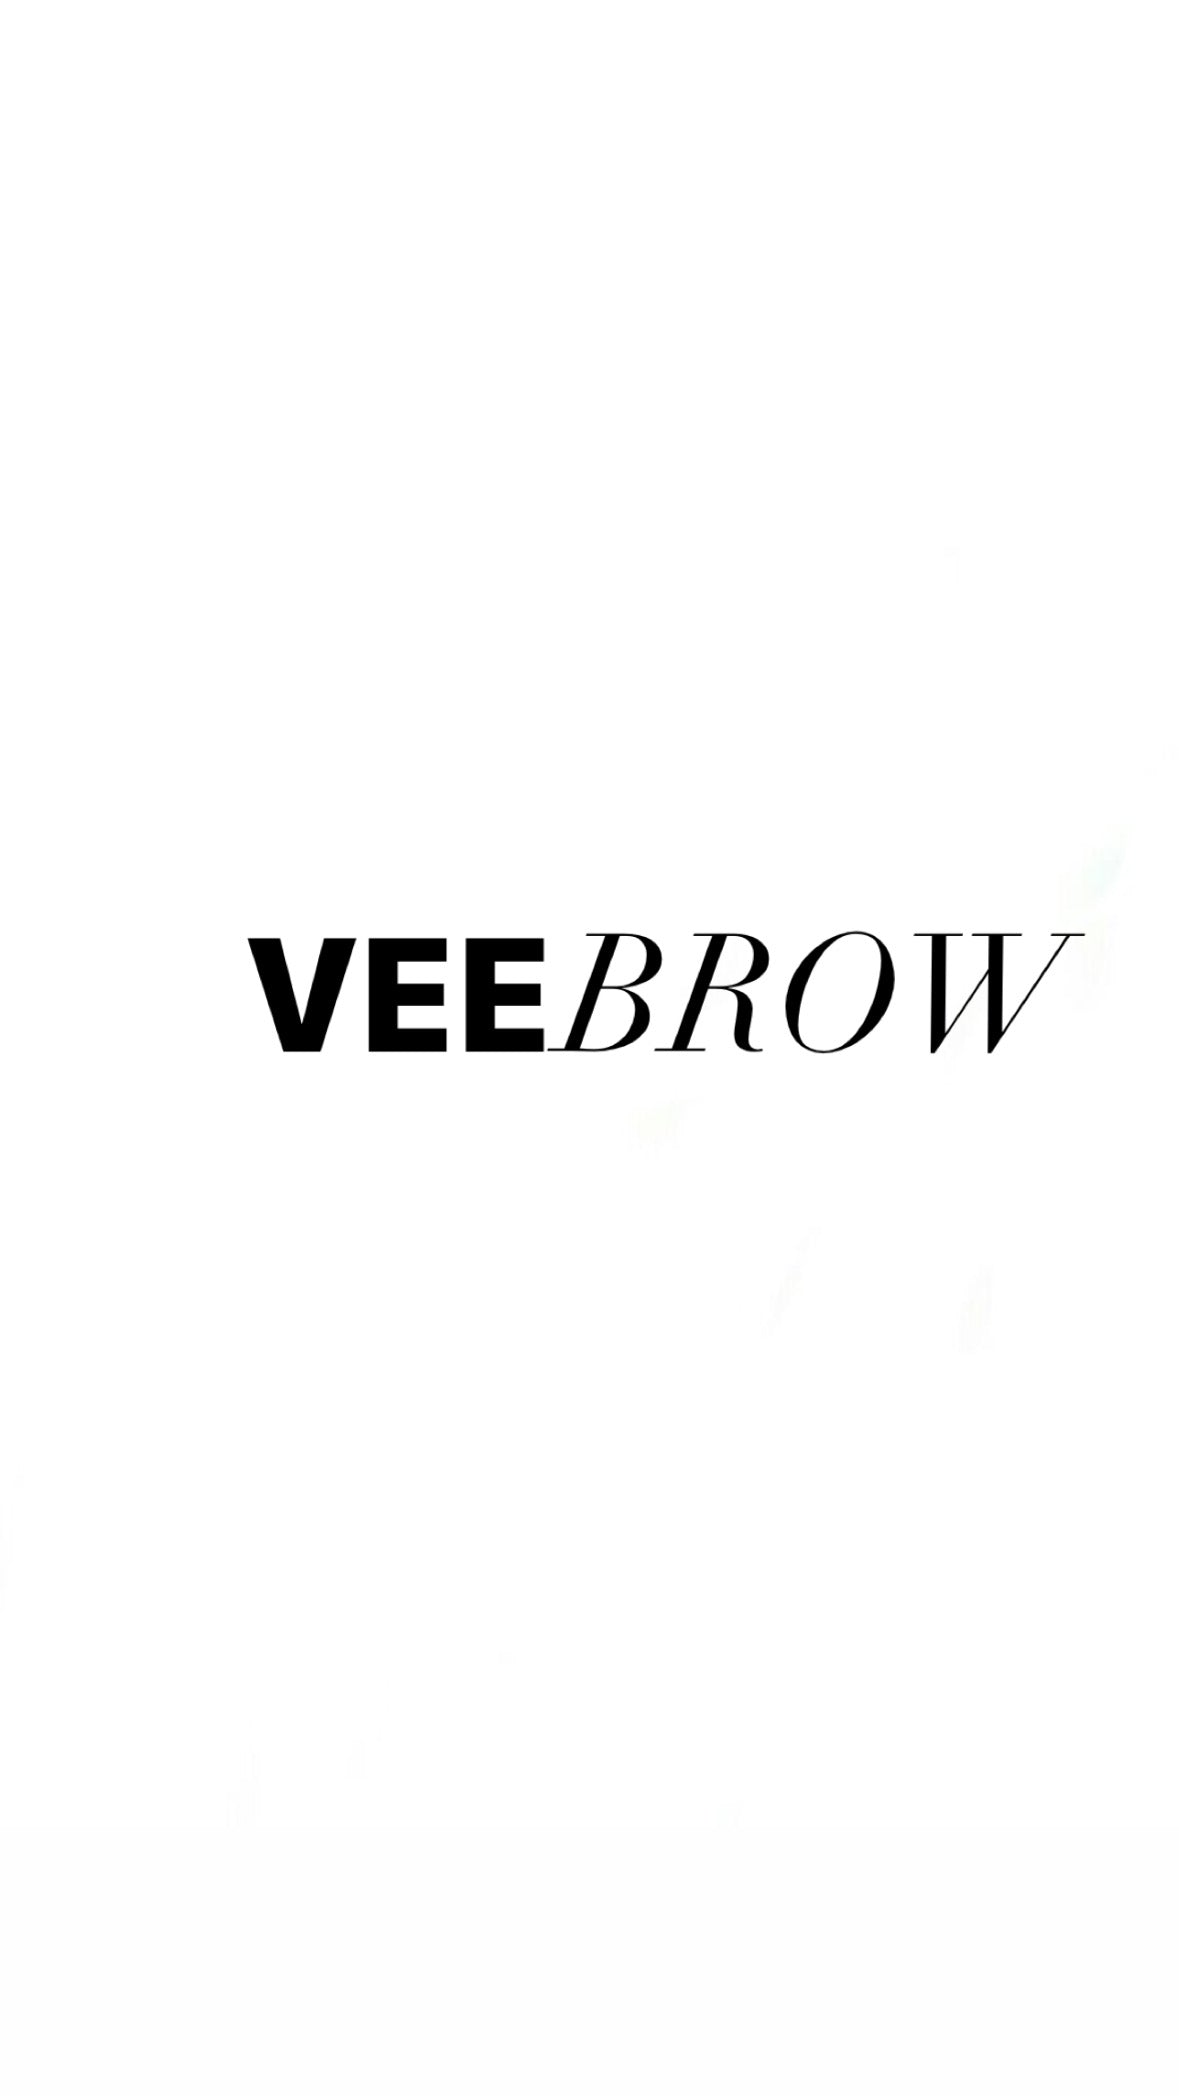 VeeBrow